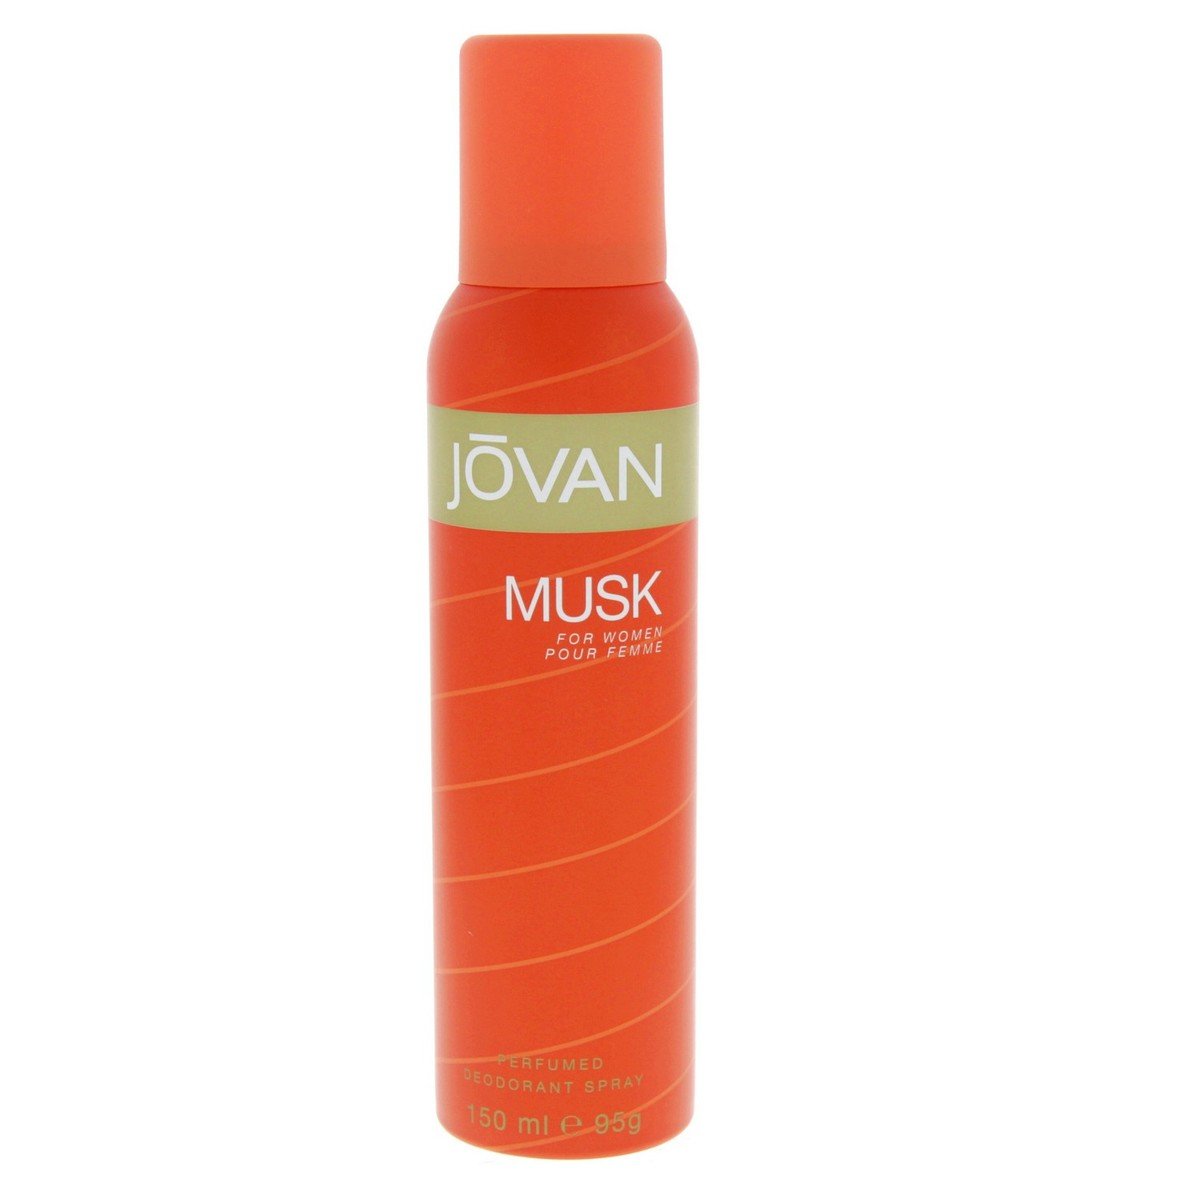 Jovan Musk Deodorant Spray for Women 150 ml